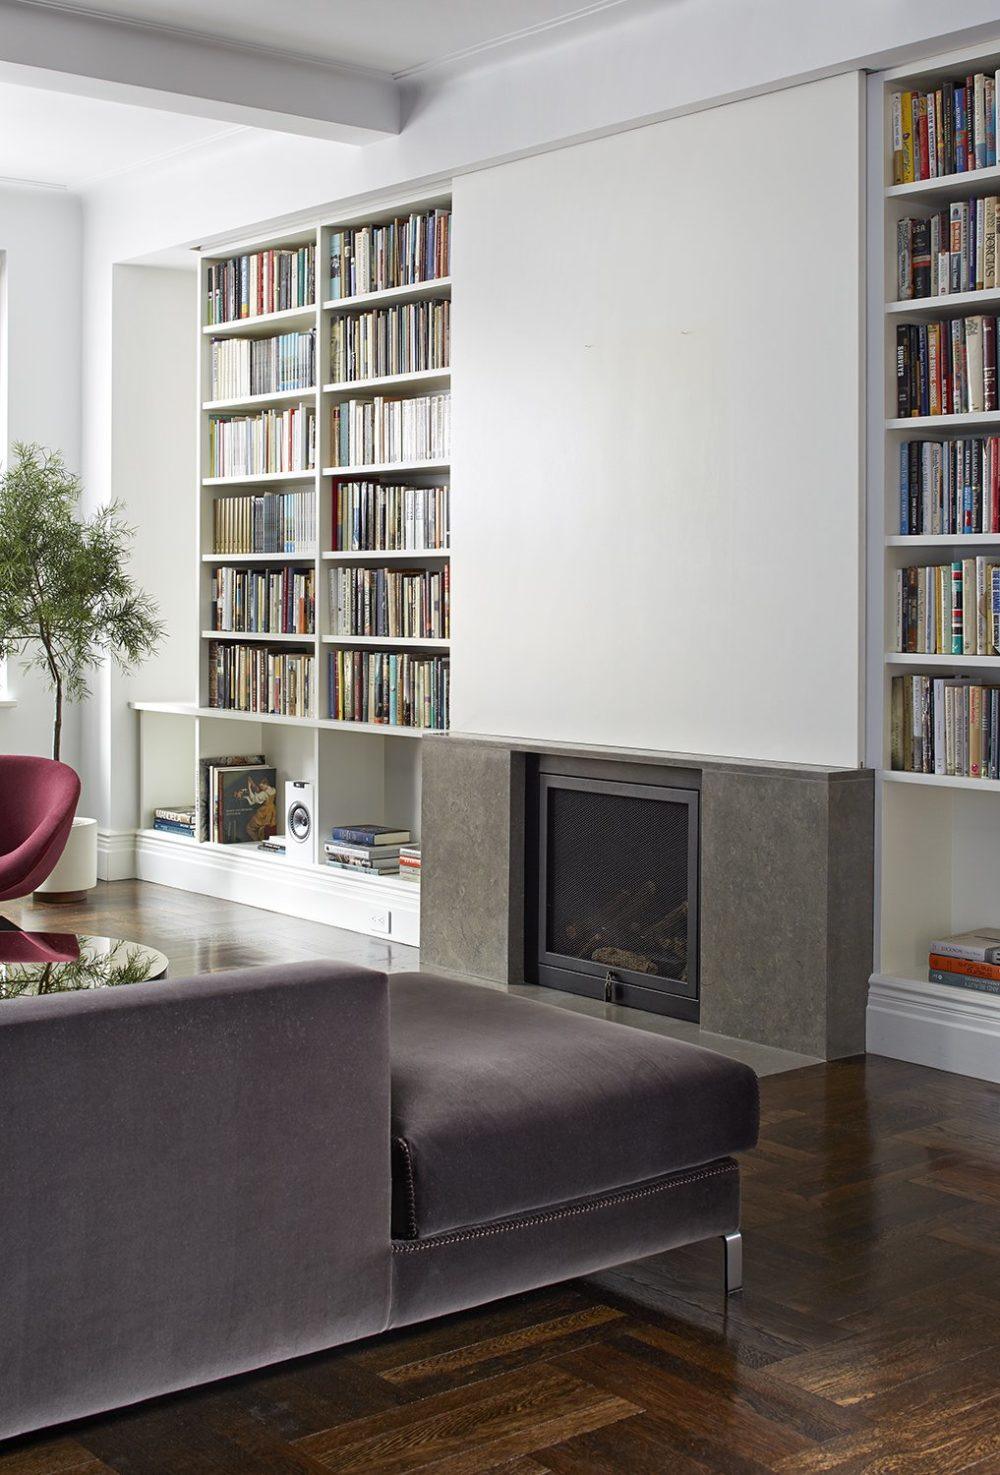 via Dwell.com - James Wagman - Architect - Panel over fireplace - conceals TV